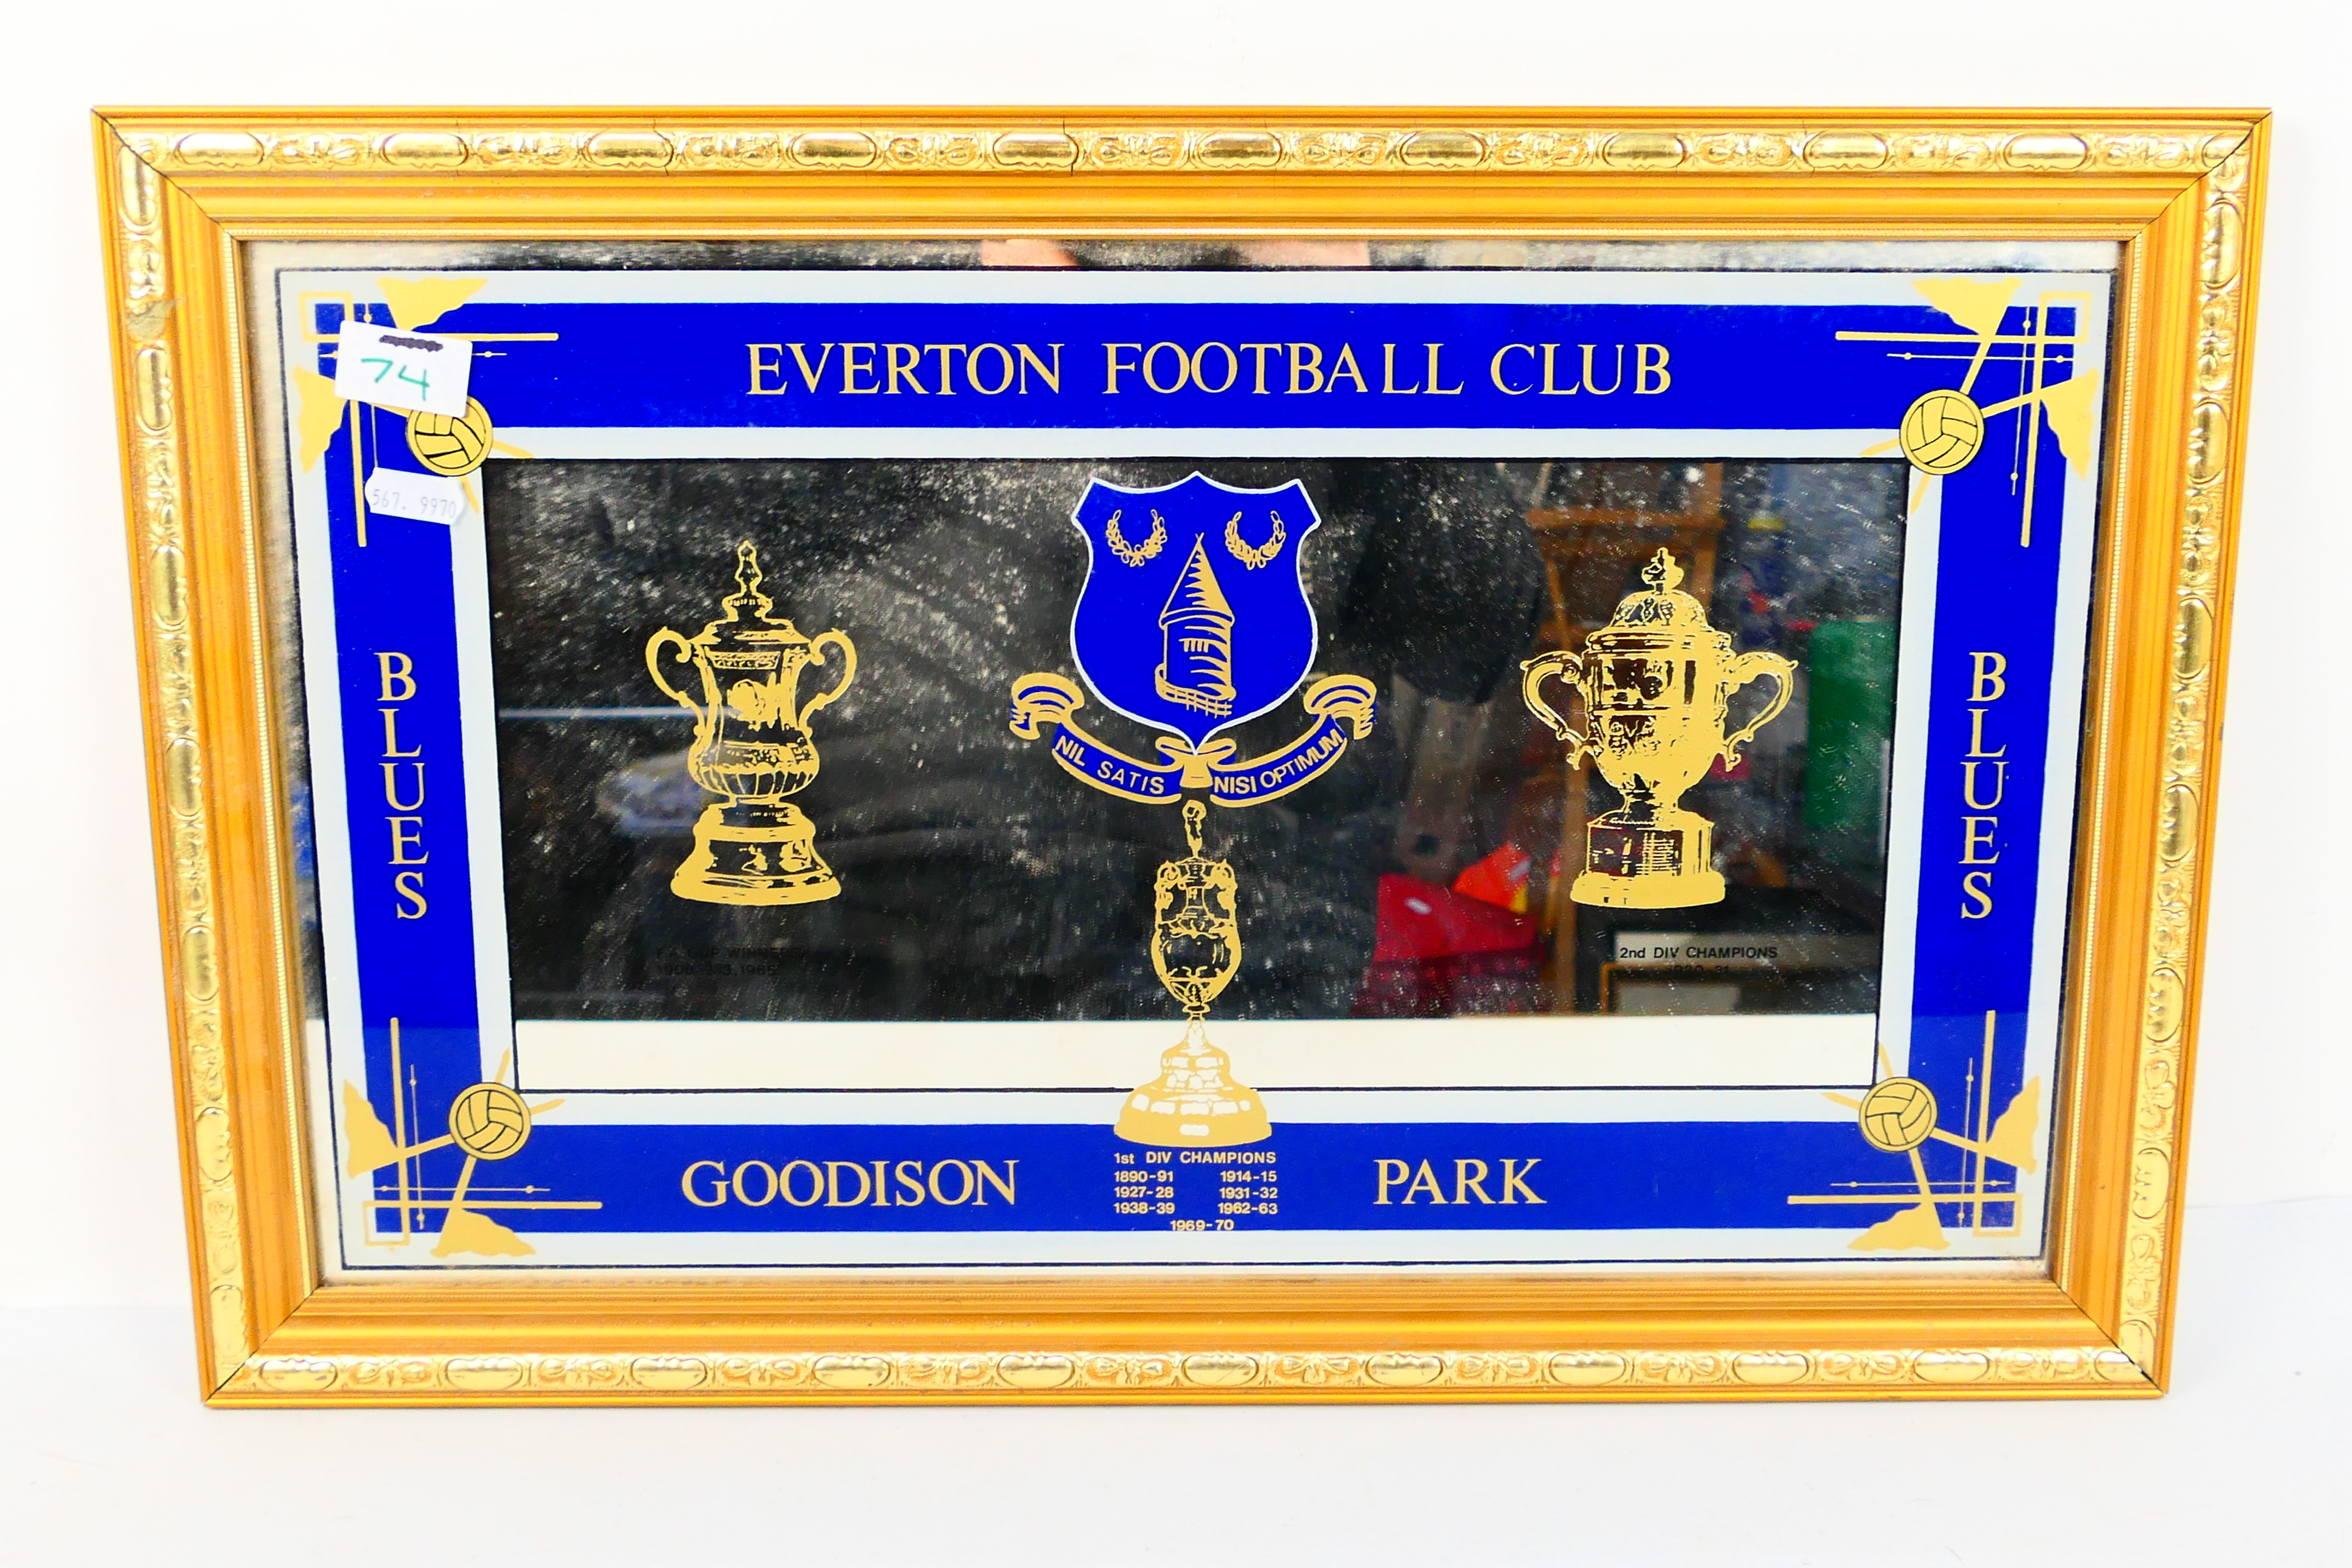 Everton Football Club - An Everton F.